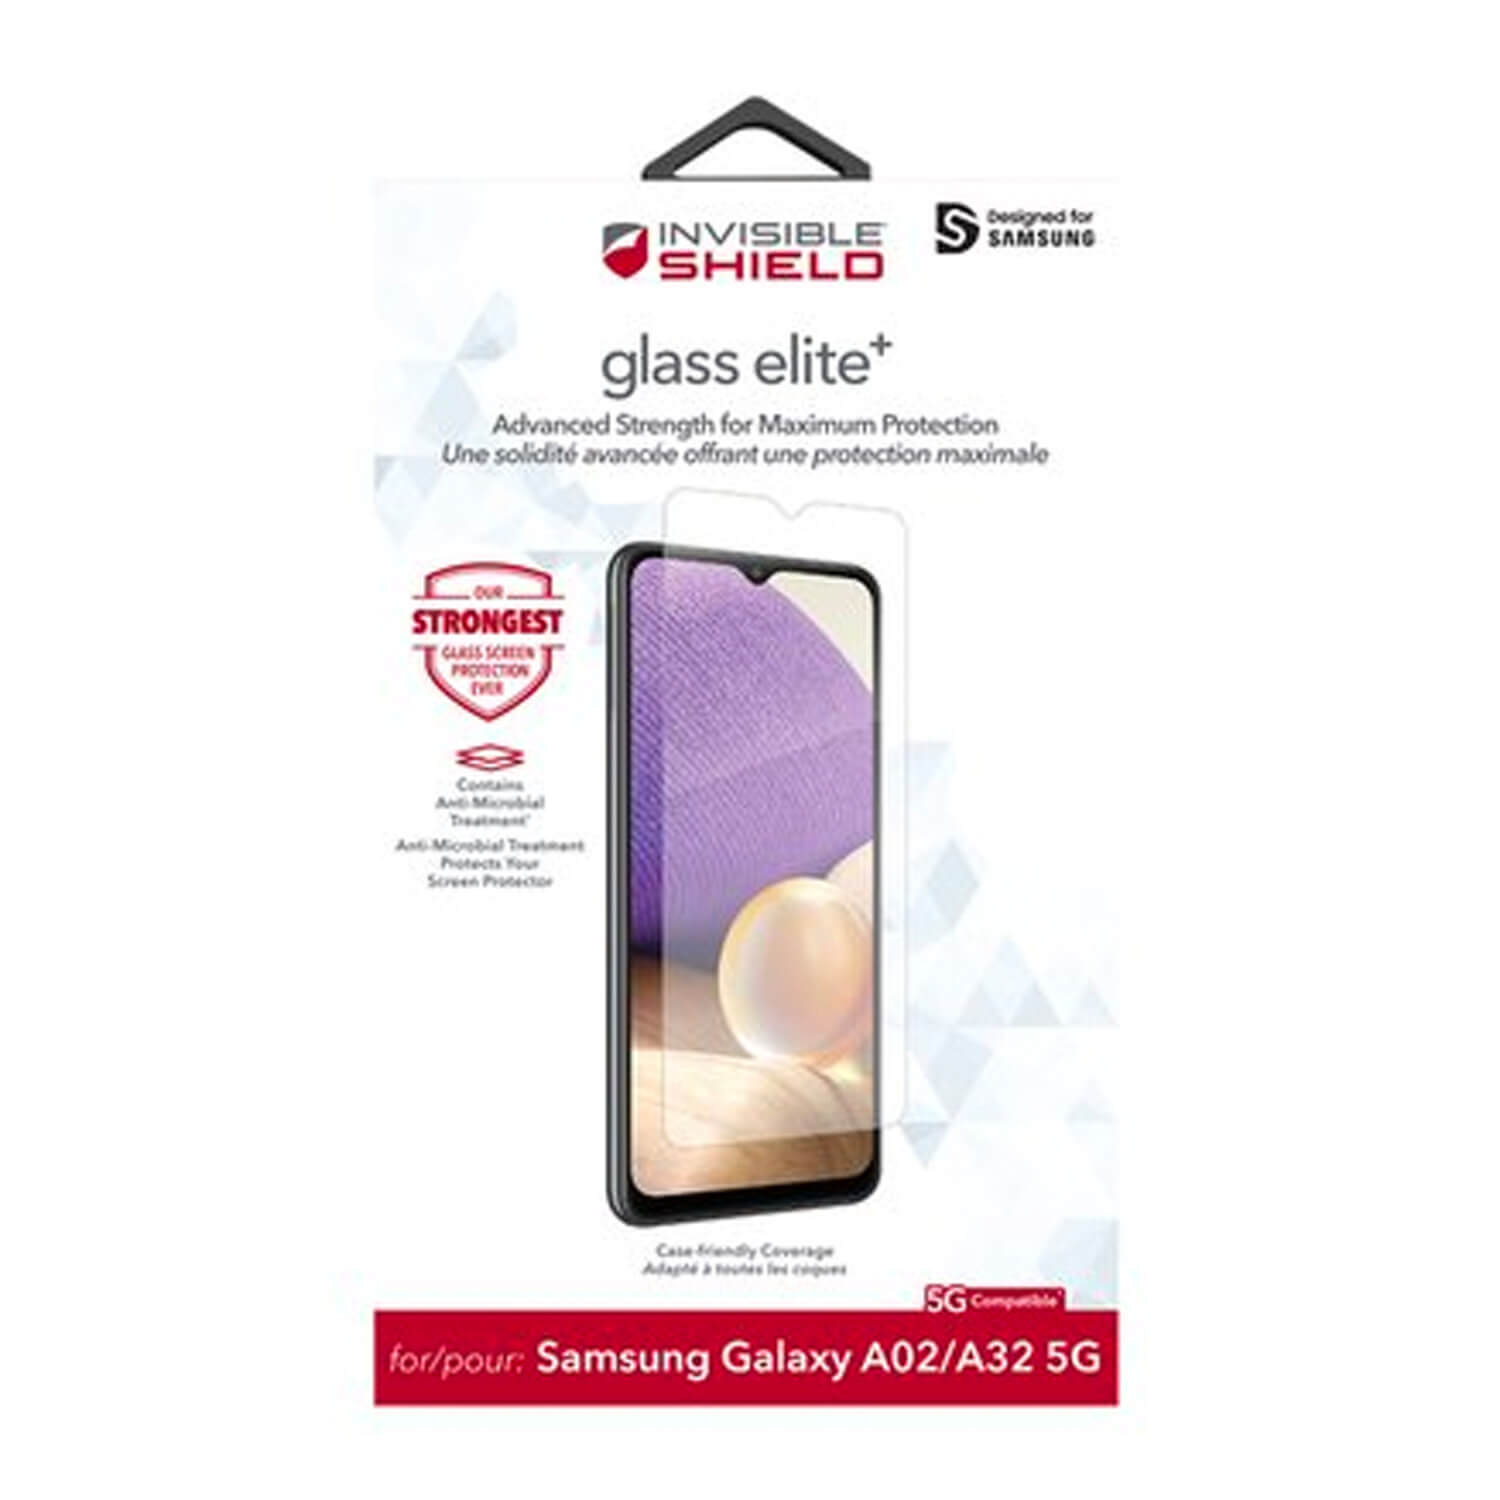 ZAGG InvisibleShield Samsung Galaxy A32 5G Screen Protector Glass Elite+